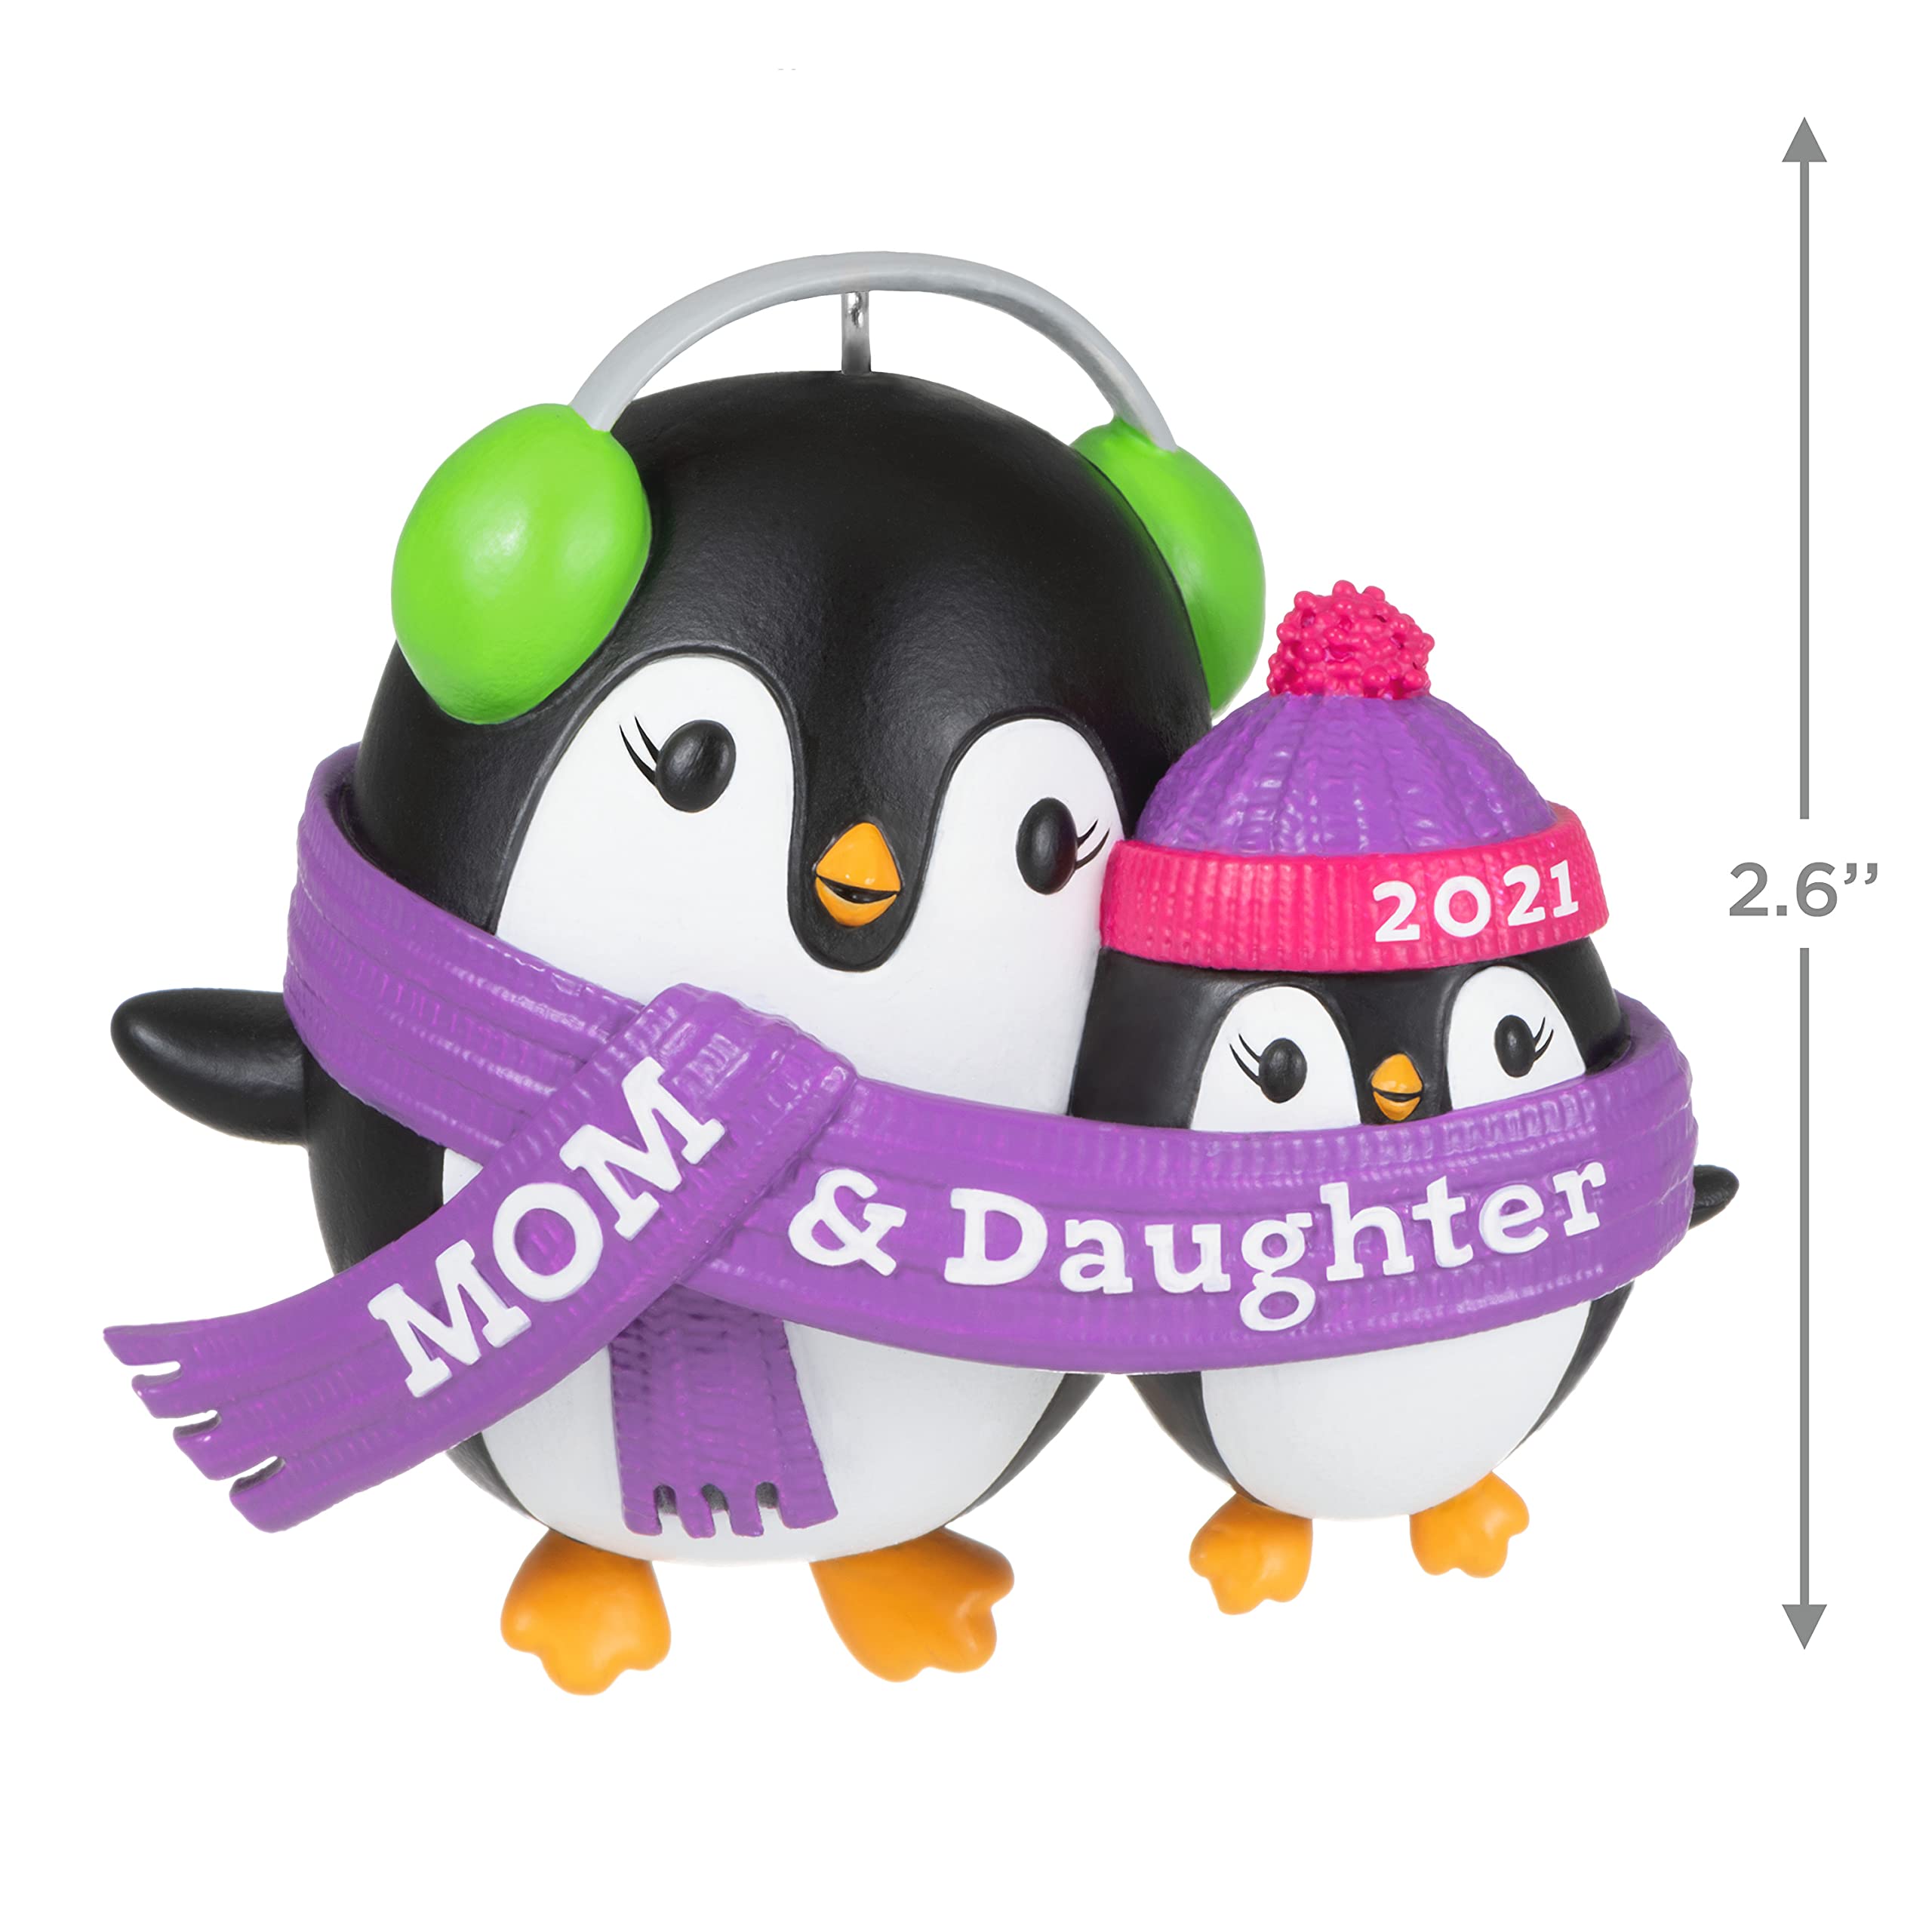 Mom & Daughter Penguins Hallmark Keepsake Christmas Ornament 2021